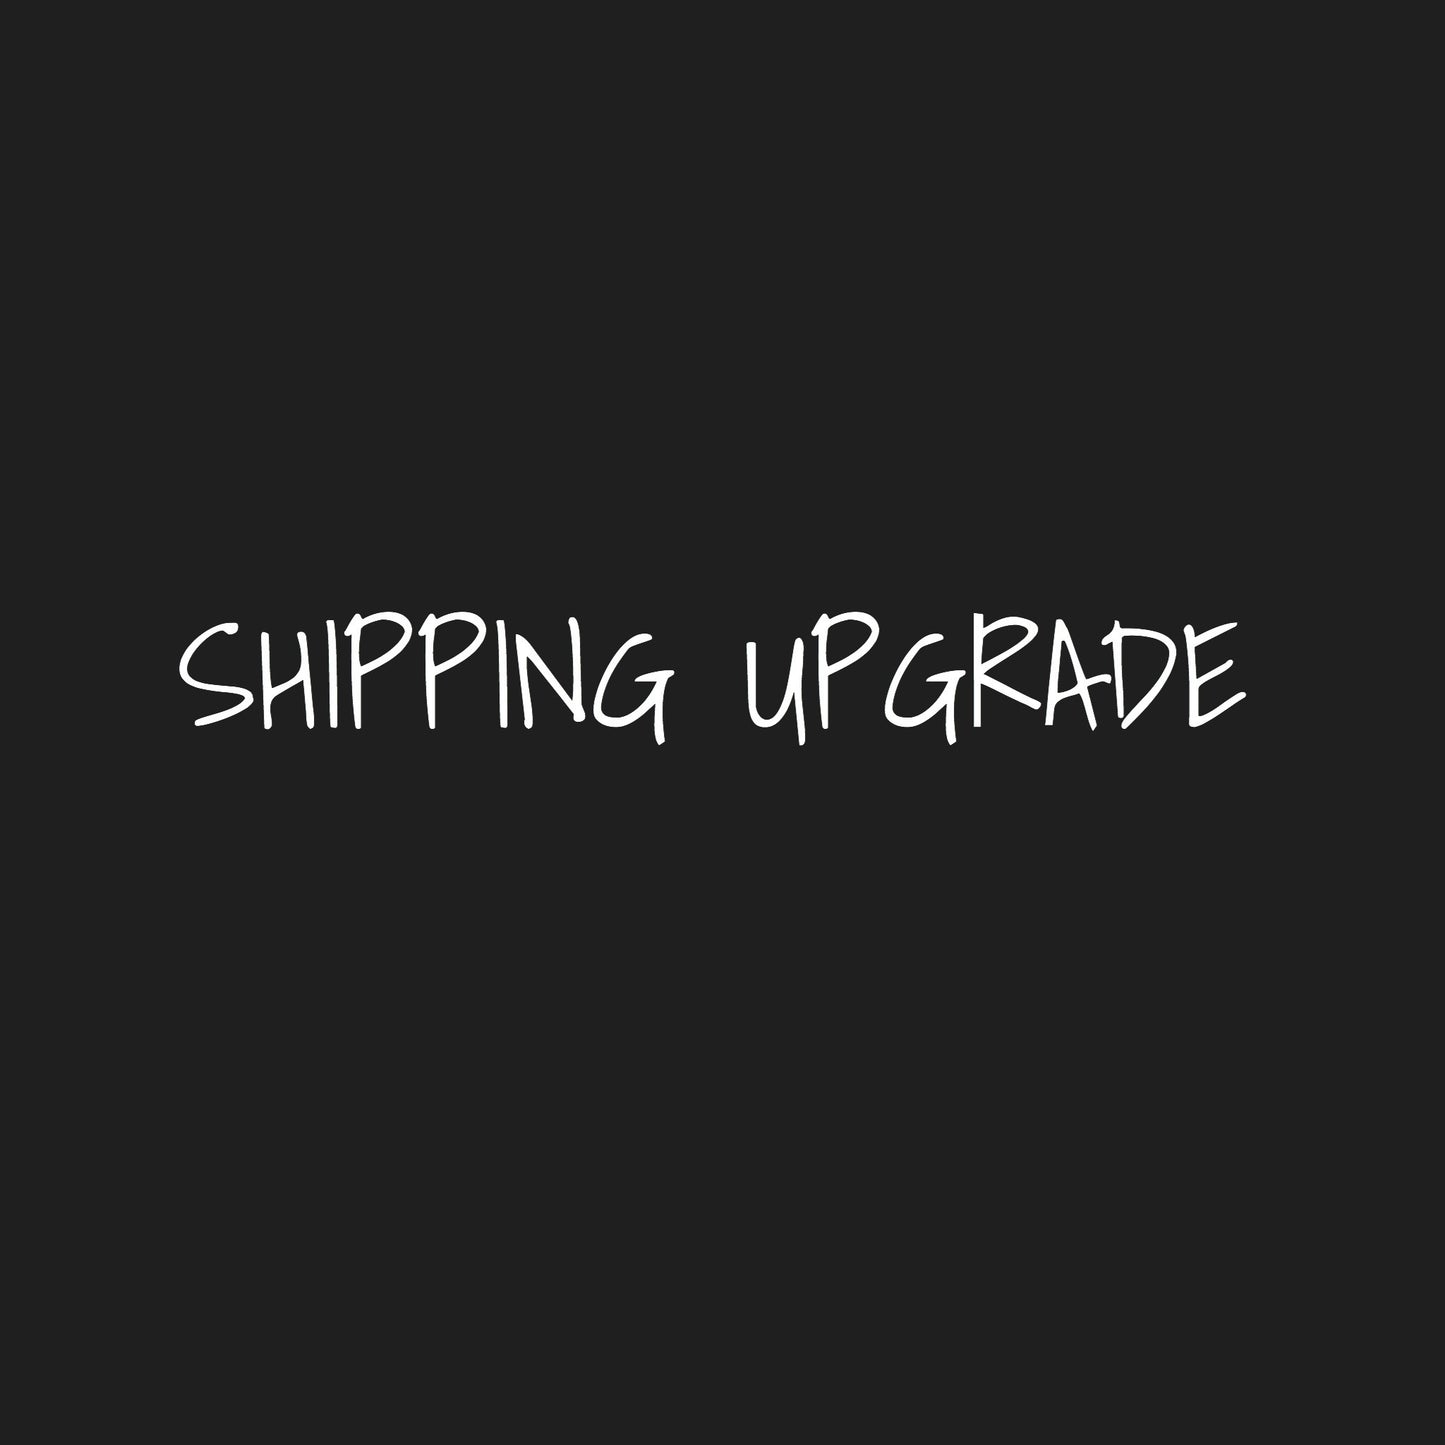 Shipping upgrade - Posh Panda